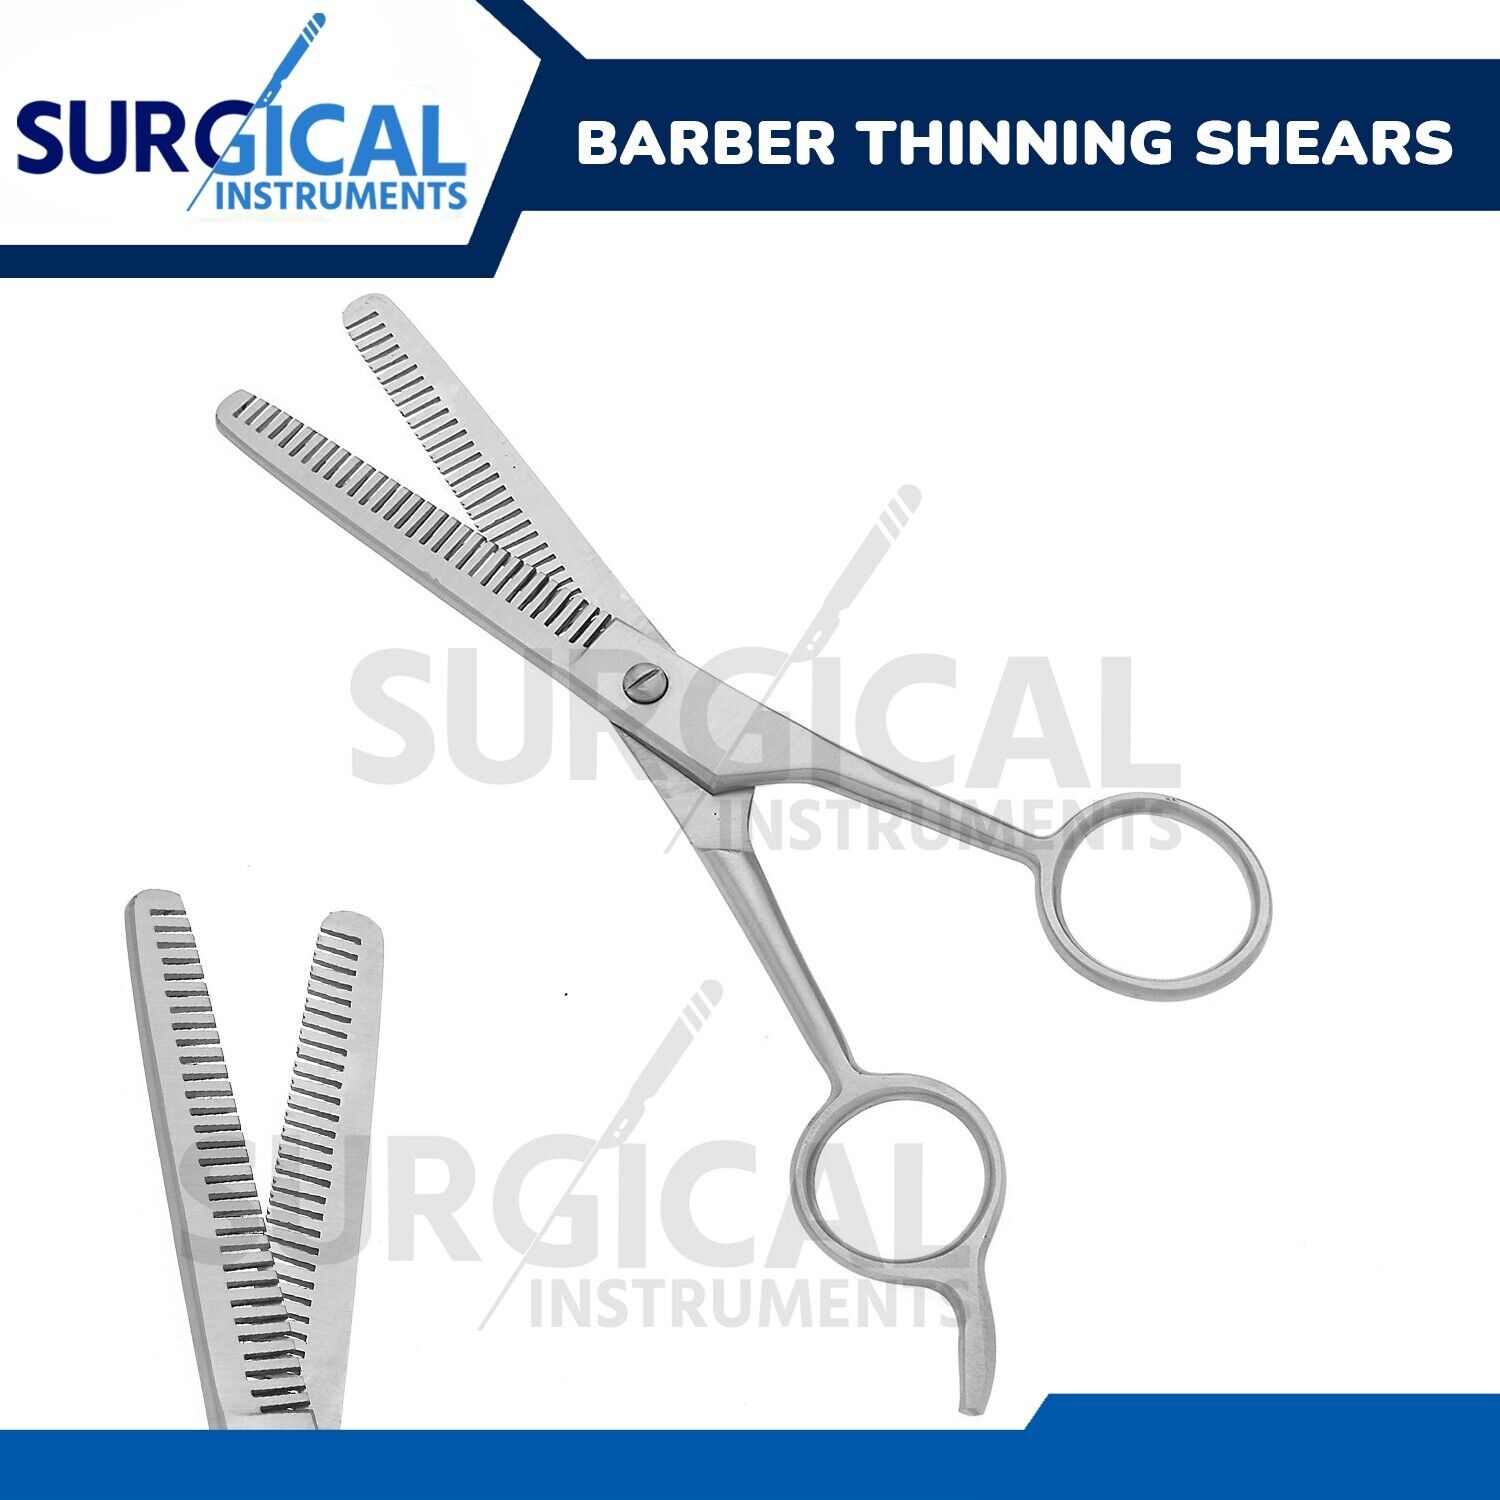 6.5" Double Teeth Hair Salon Stylist Barber Thinning Scissors Shear German Grade SurgInstruments Does Not Apply